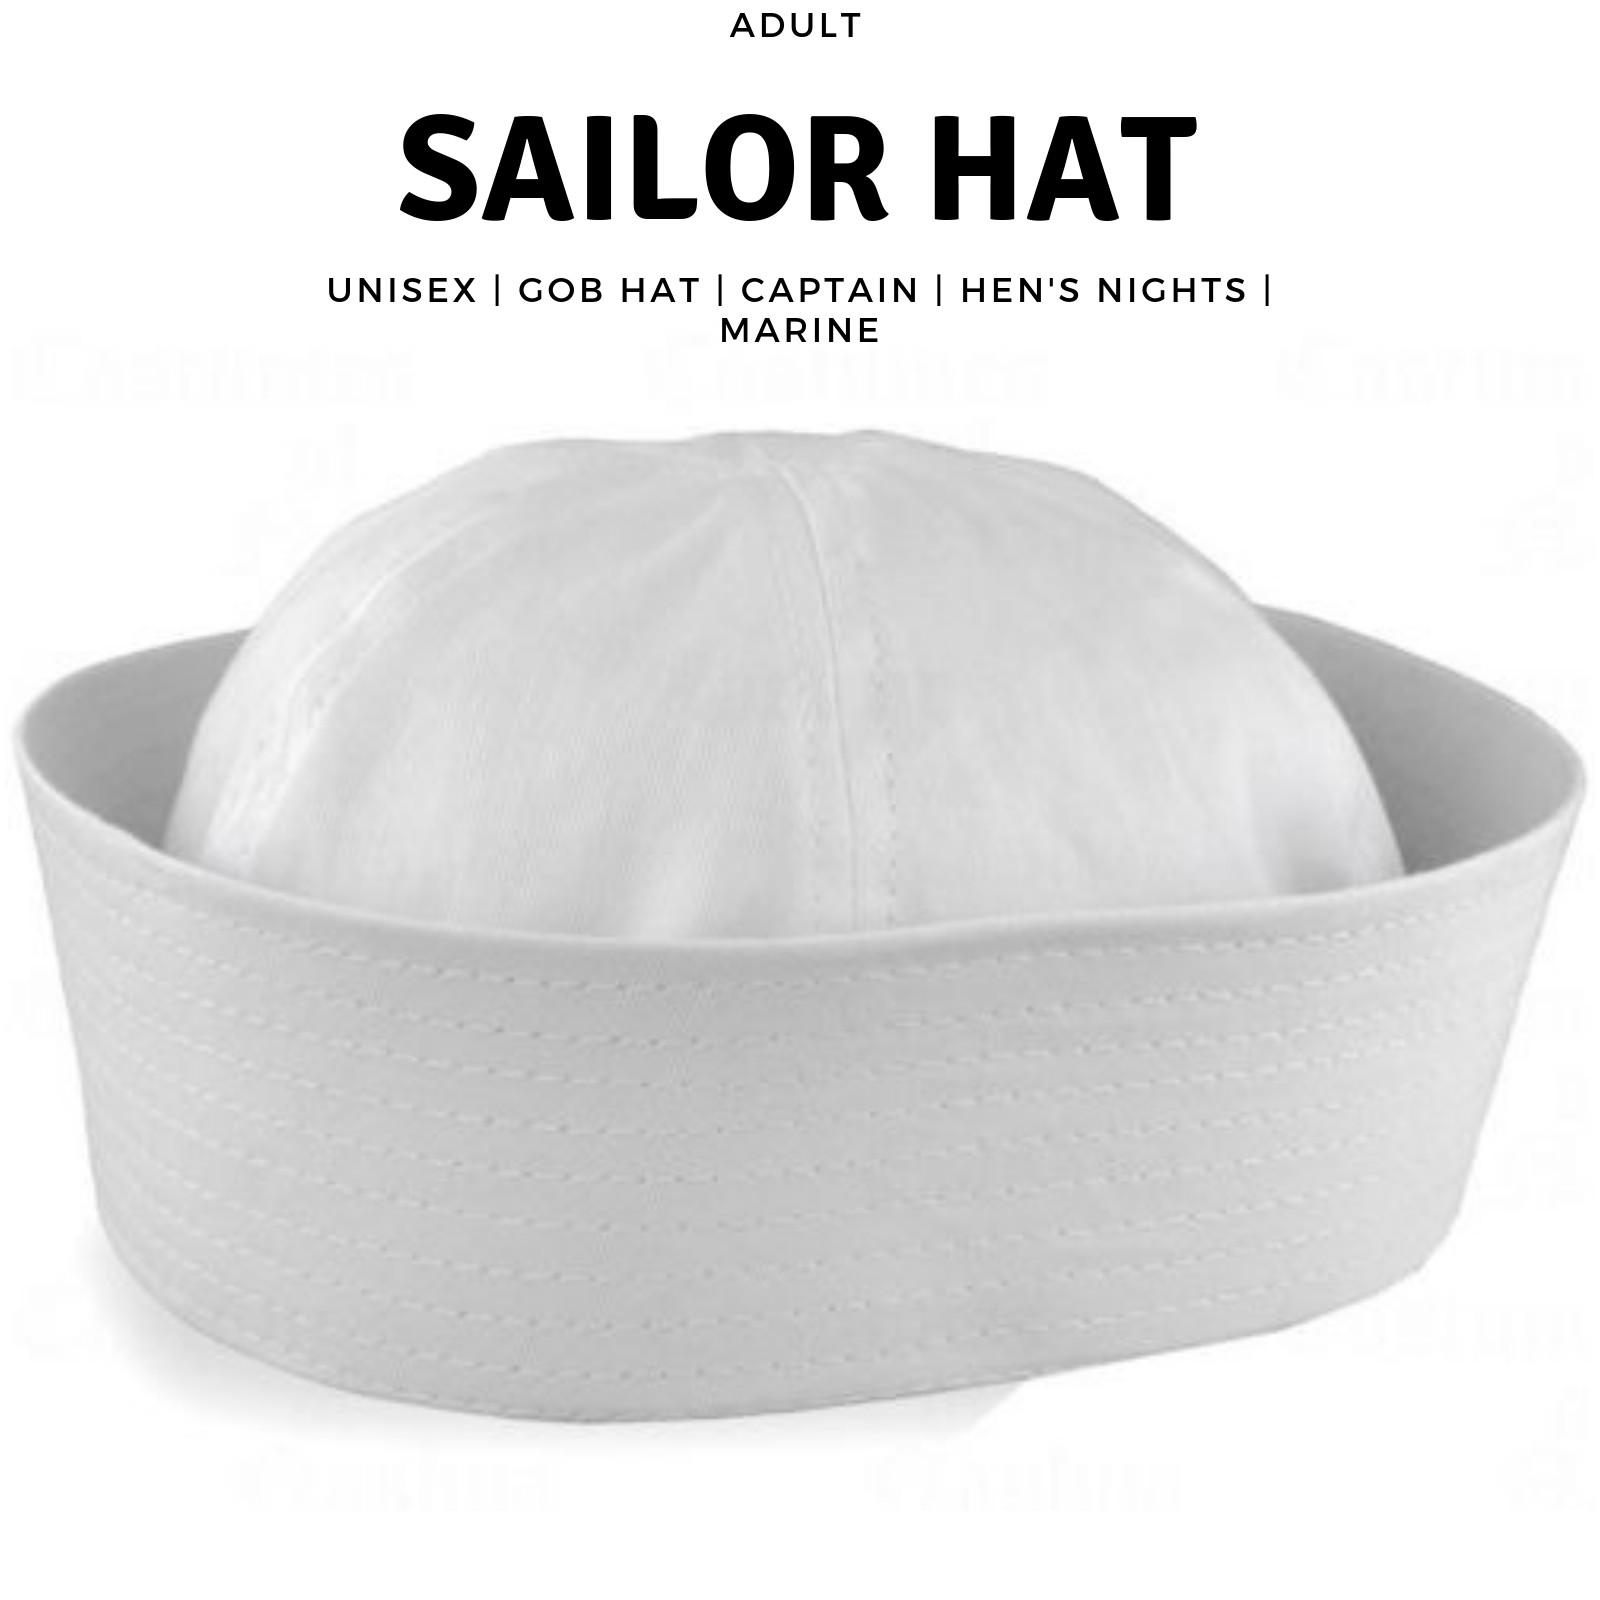 Adult White Sailor Hat Marine Unisex Gob Captain Navy Hen's Night Doughboy Cap - 0